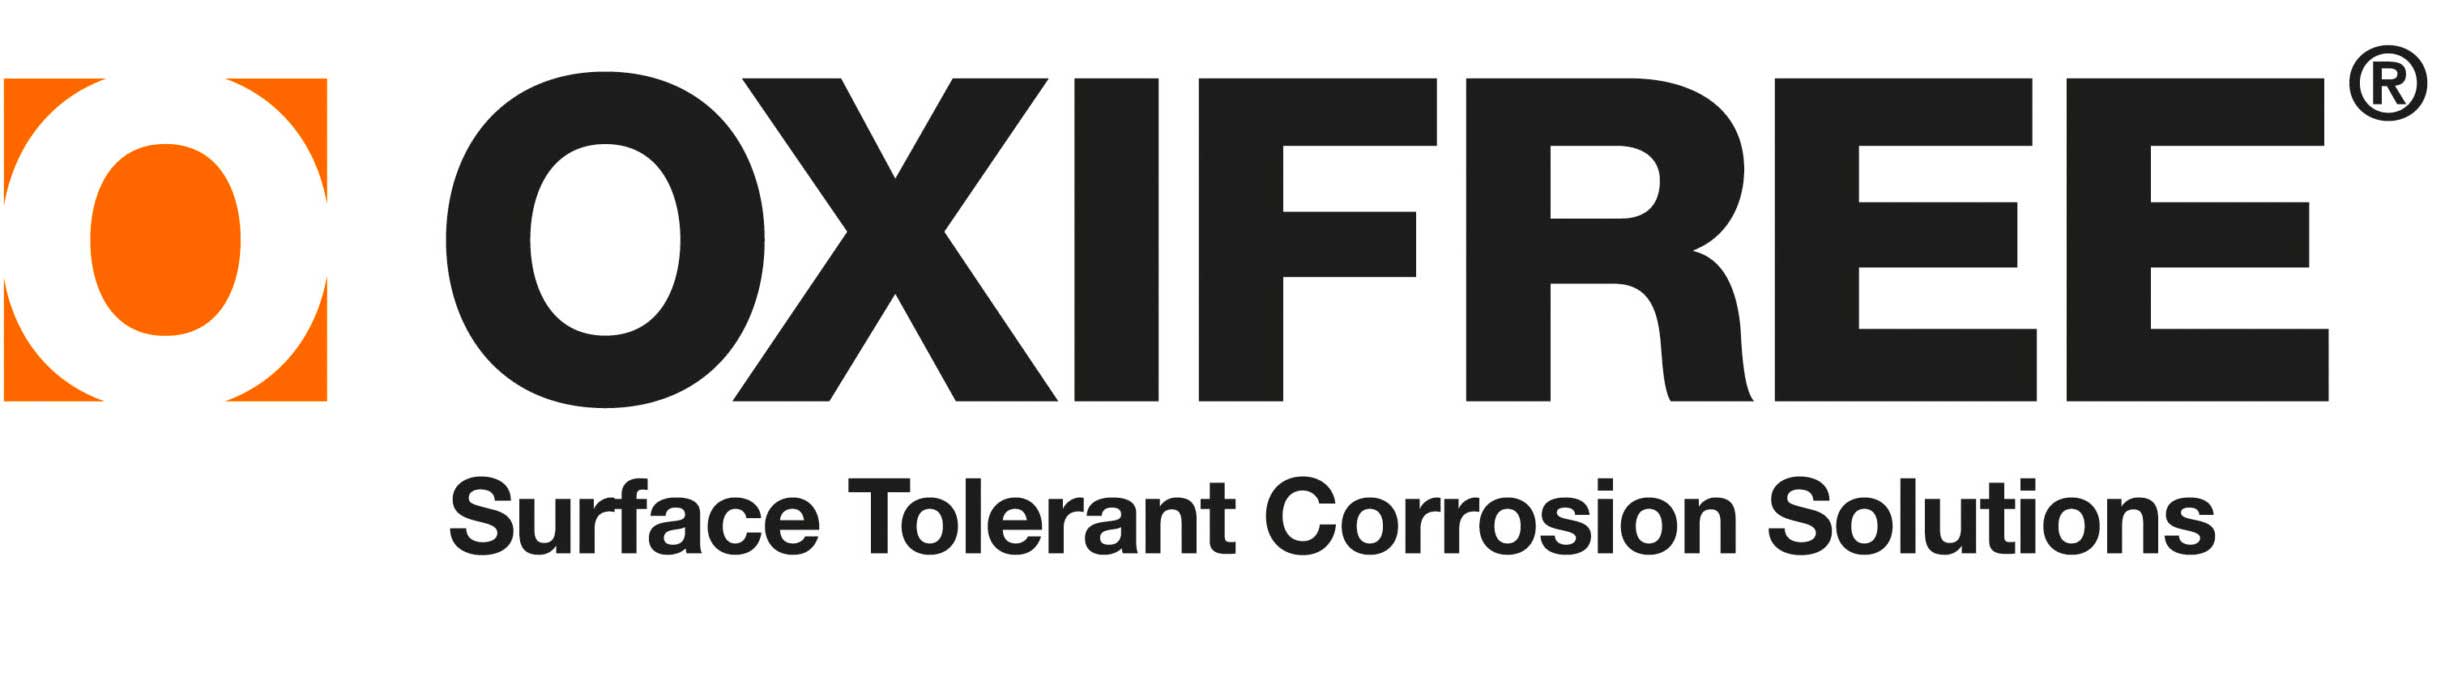 OXIFREE logo and tagline